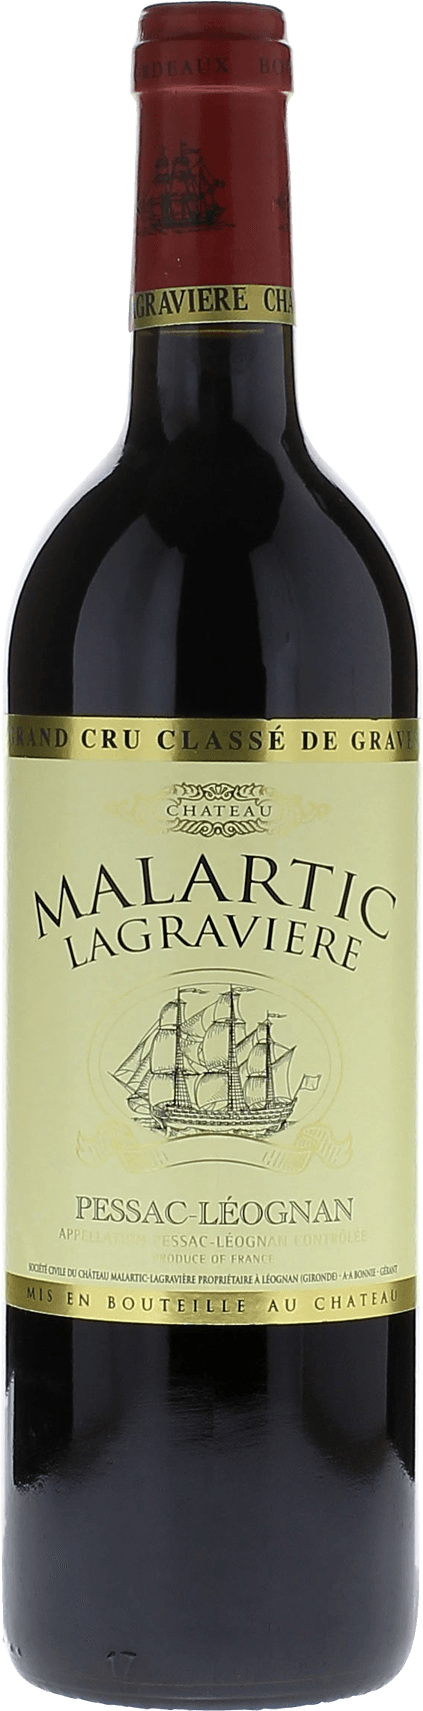 Malartic lagraviere rouge 1984 Grand Cru Class Graves, Bordeaux rouge